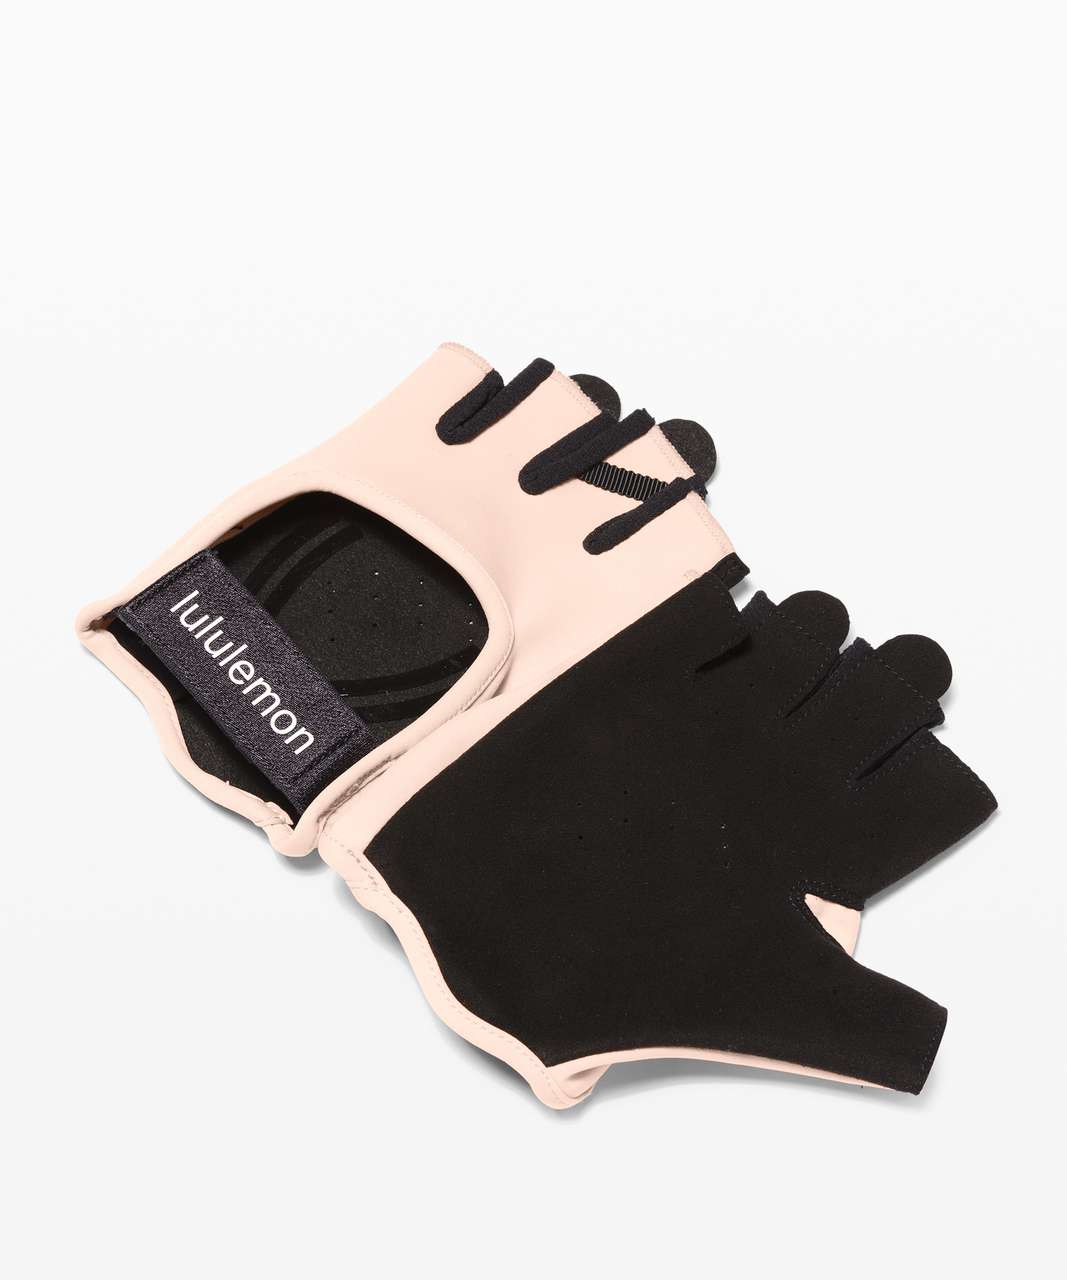 Lululemon Uplift Training Gloves - Misty Shell / Black